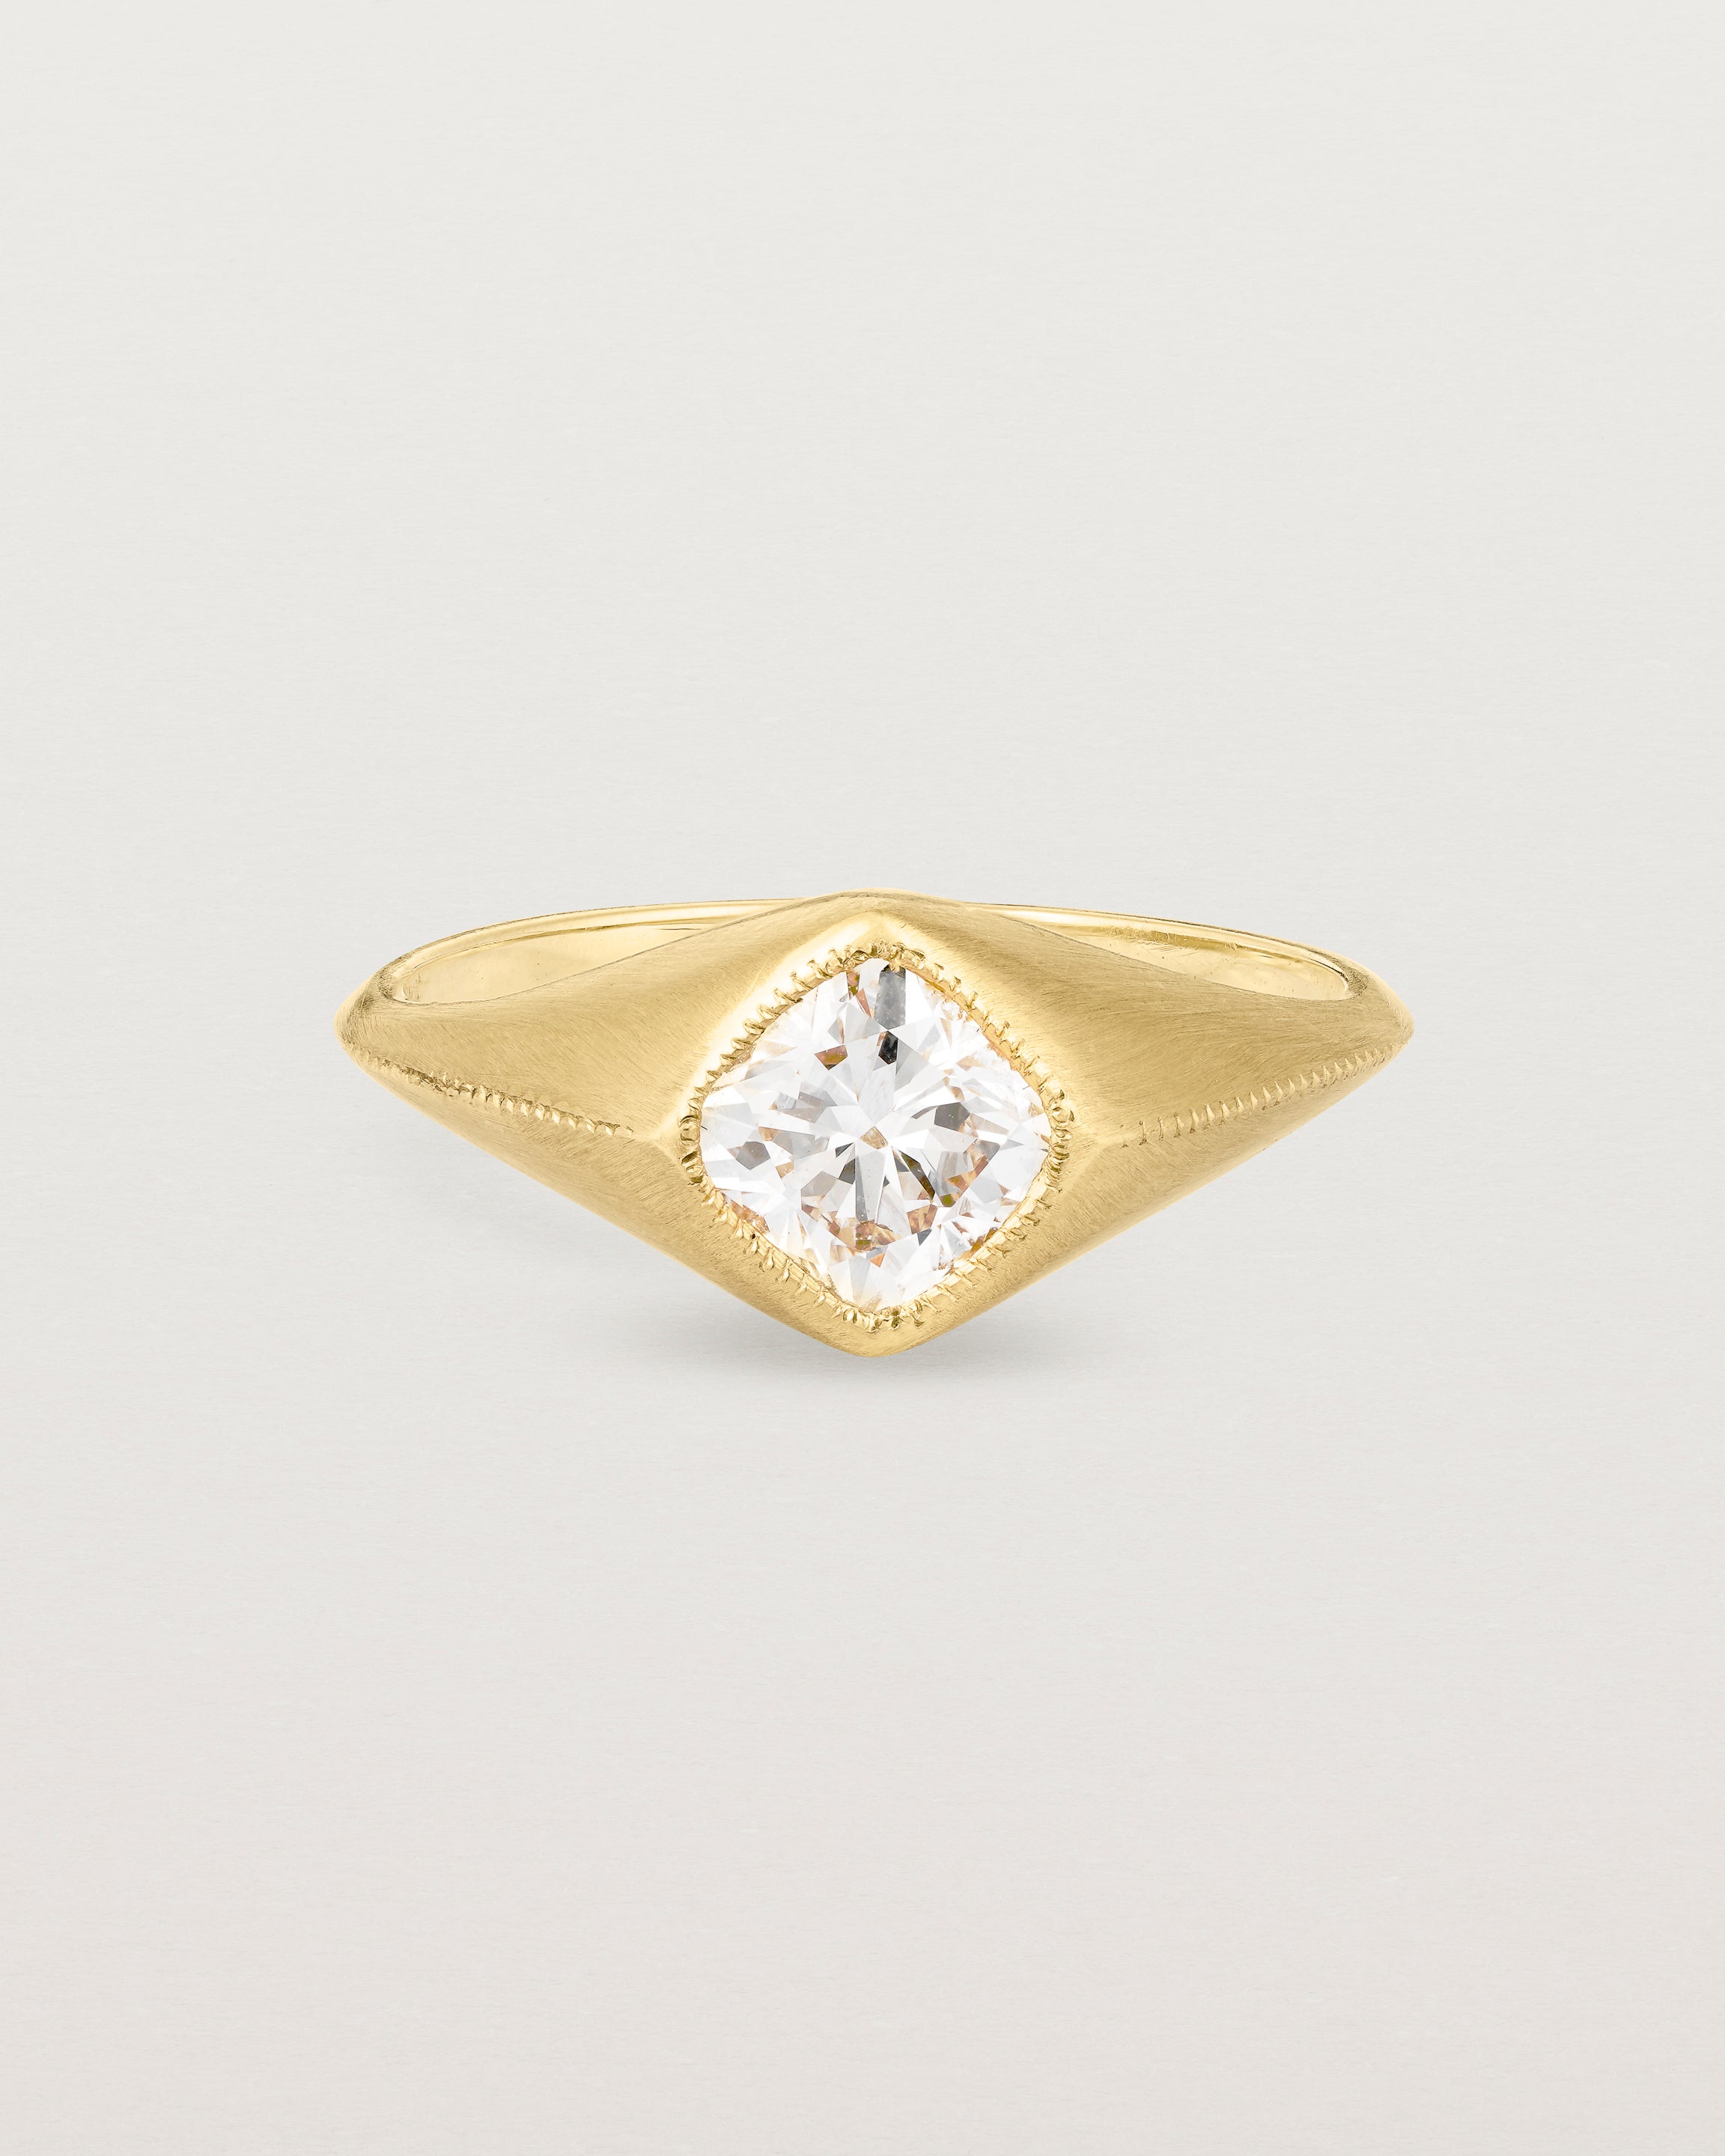 A yellow gold Signet Ring featuring a cushion cut white diamond